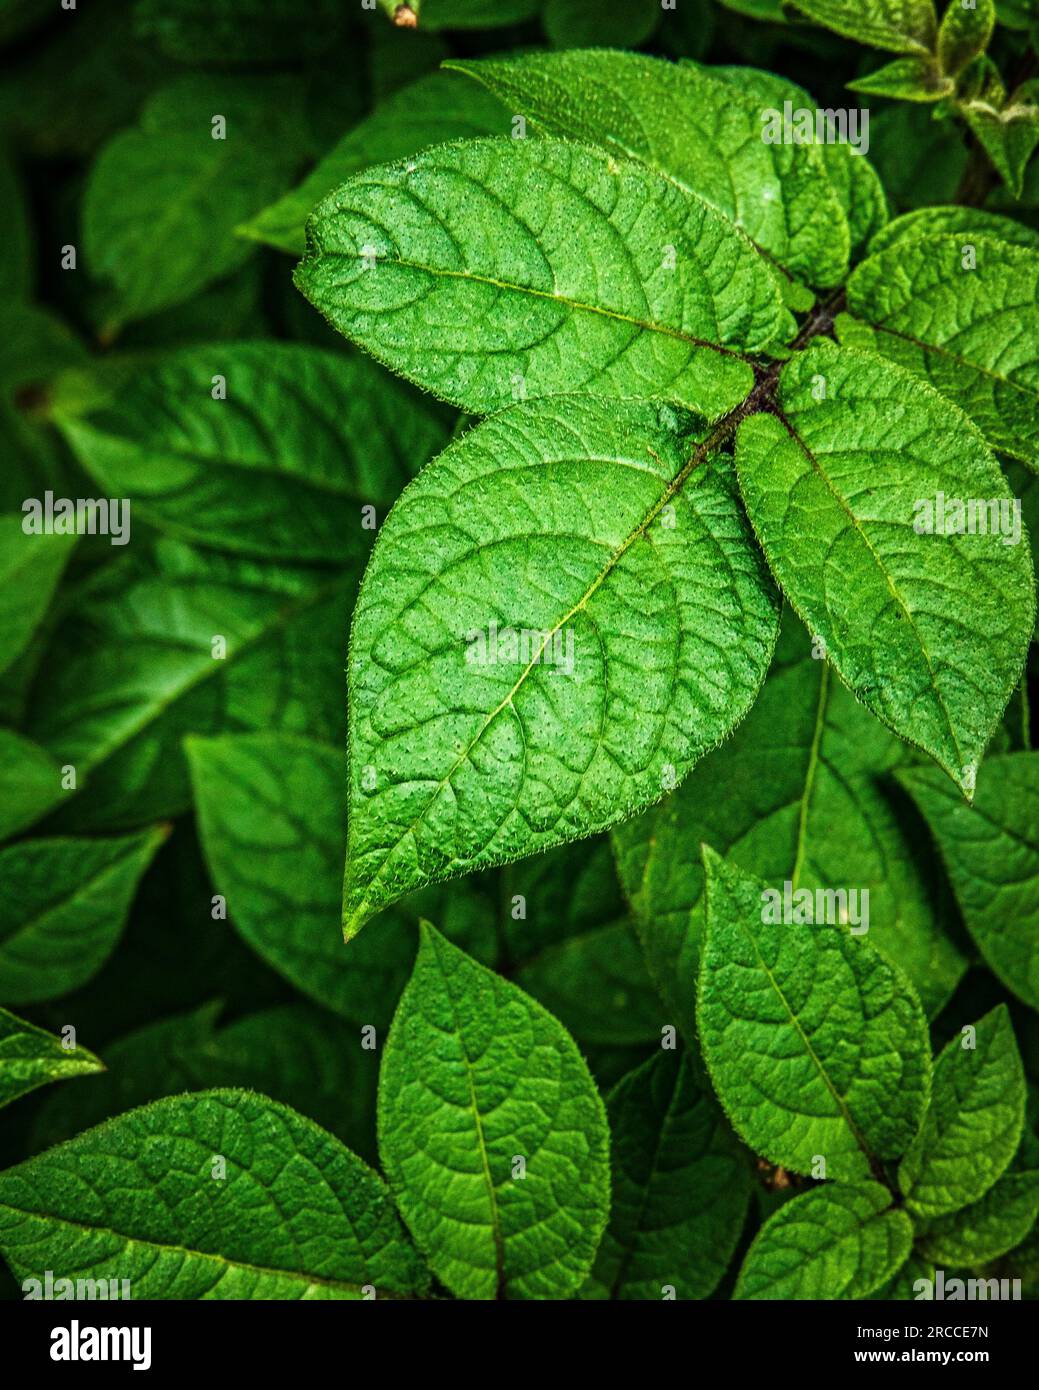 Green potato plant leaves Stock Photo